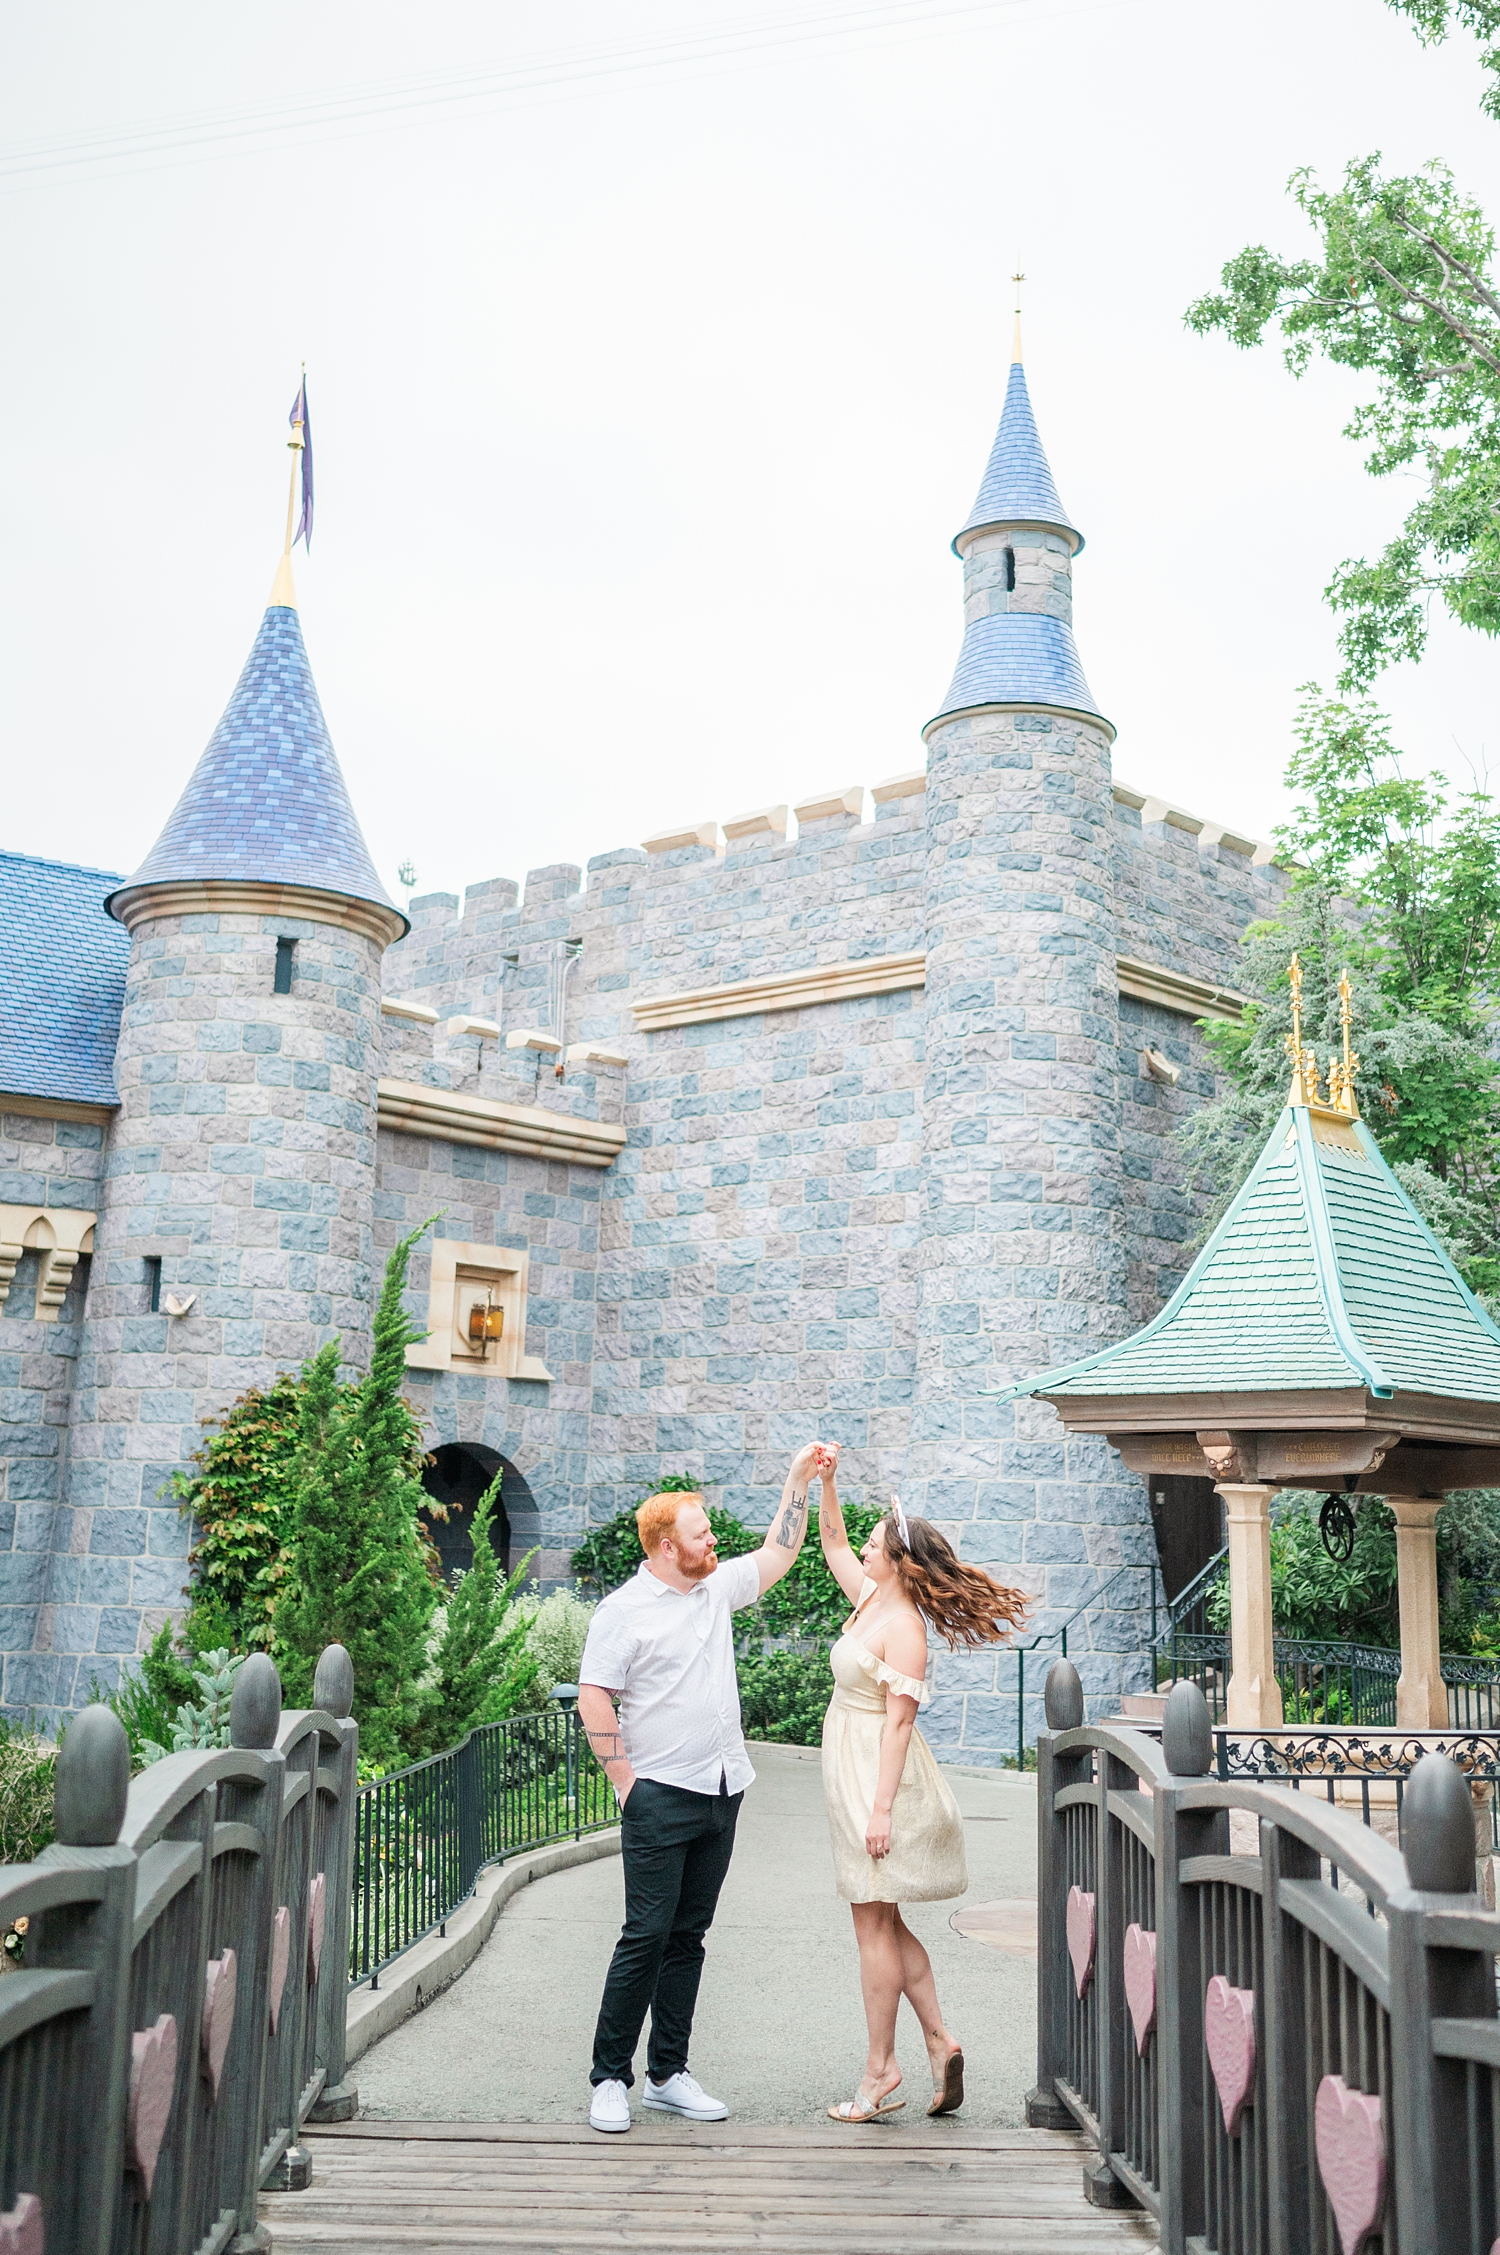 Disneyland Engagement | Disneyland Photographer | Wedding | It's a small world | teacups ride | Nataly Hernandez Photography -5.jpg